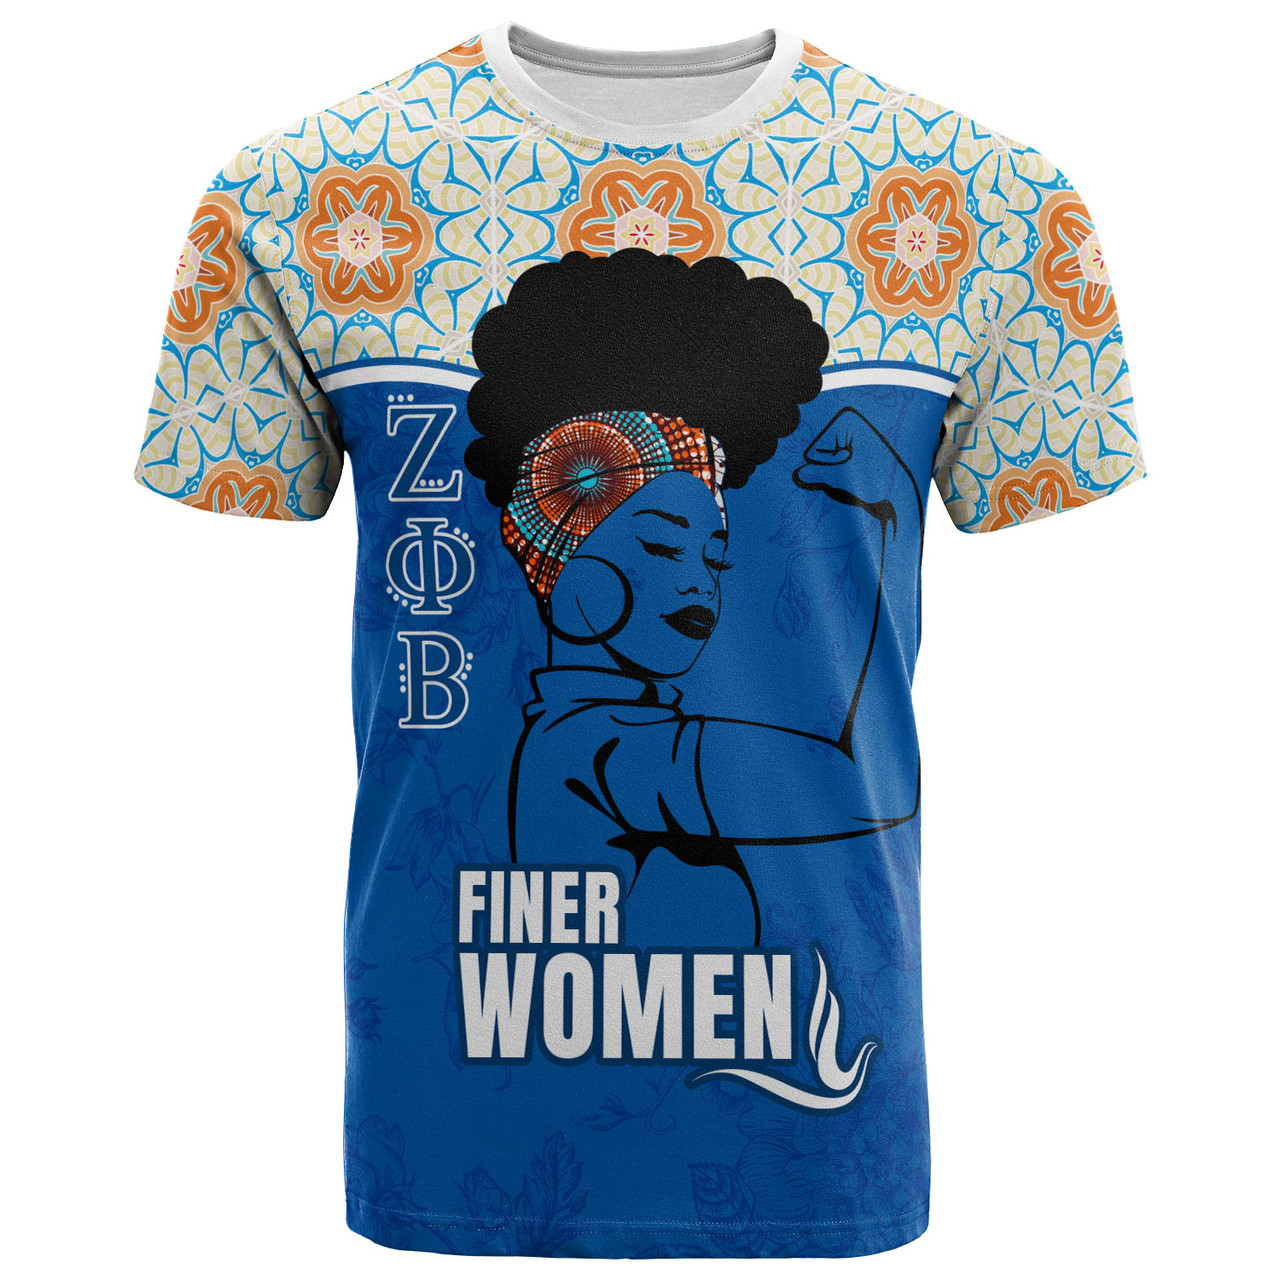 Zeta Phi Beta T-Shirt - Sorority Finer Women T-Shirt